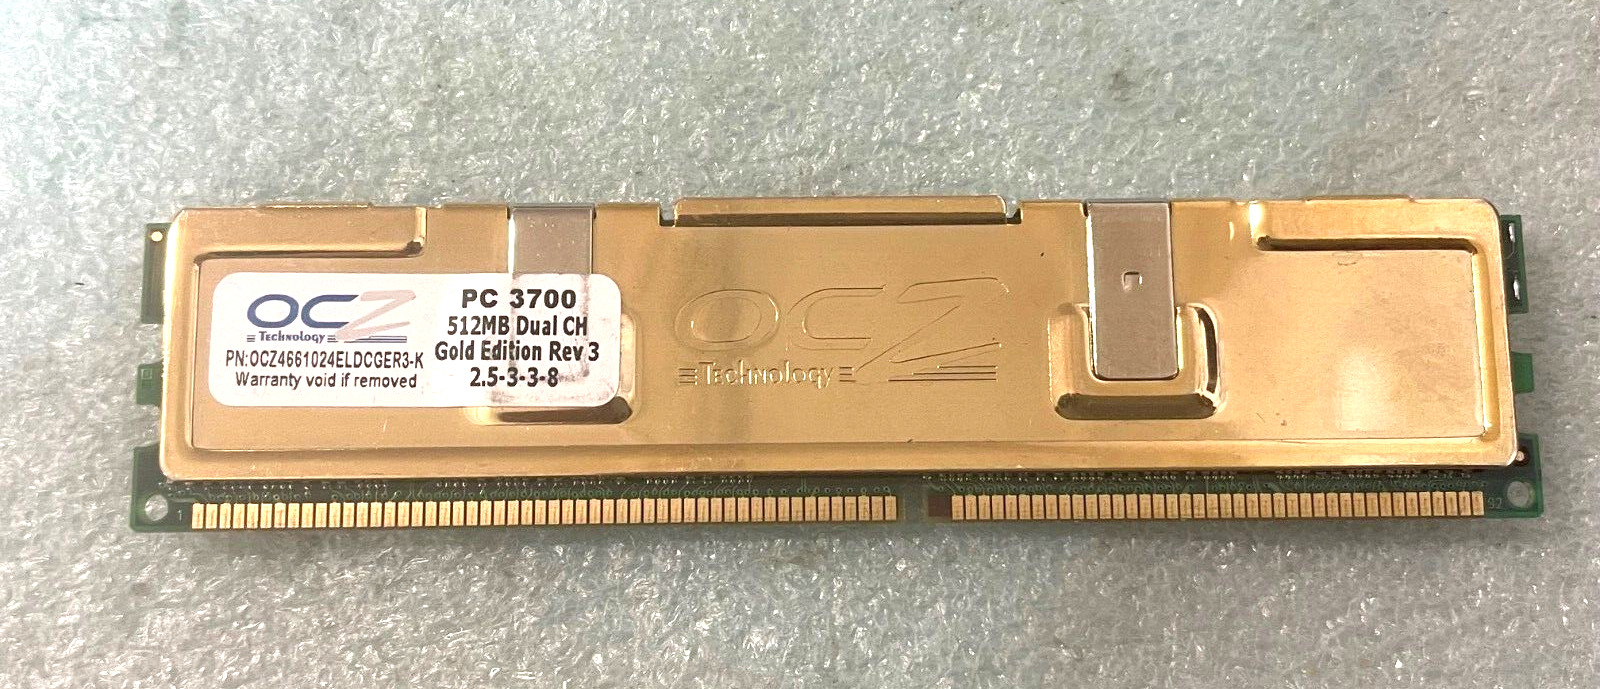 OC TECHNOLOGY OCZ4661024ELDCGER3-K 512MB DUAL CH GOLD DDR MEMORY RM2-CMP52-36